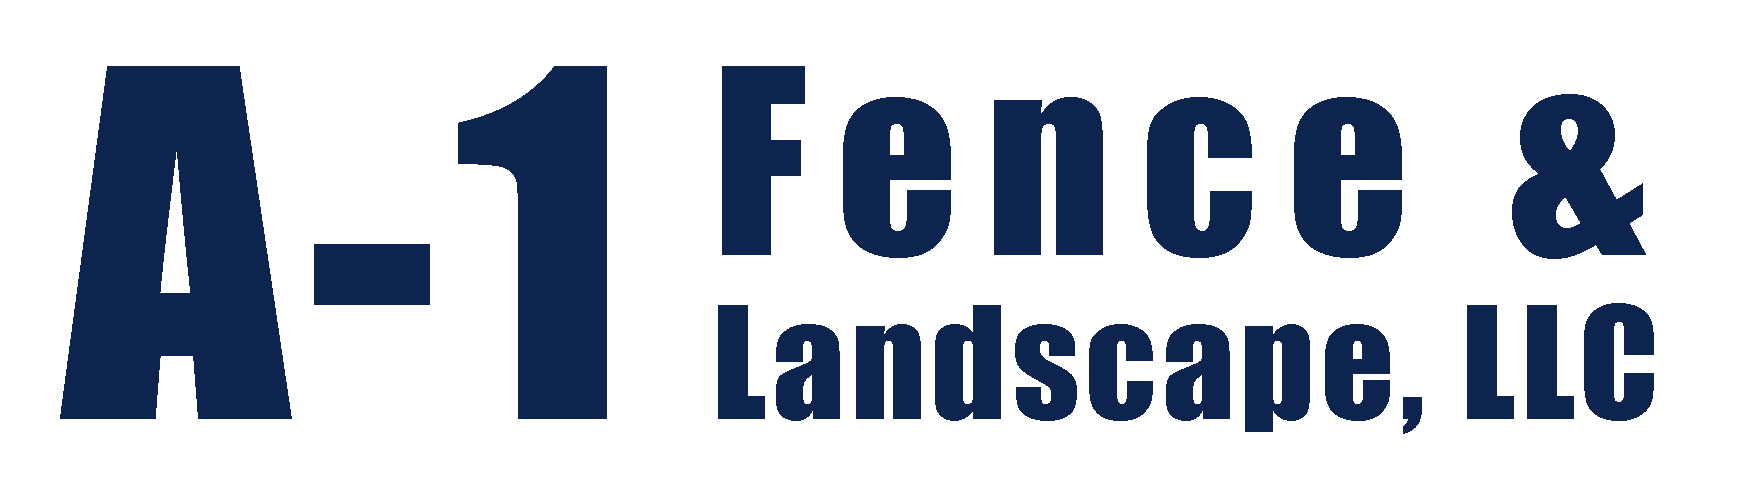 A-1 Fence & Landscape, LLC Logo